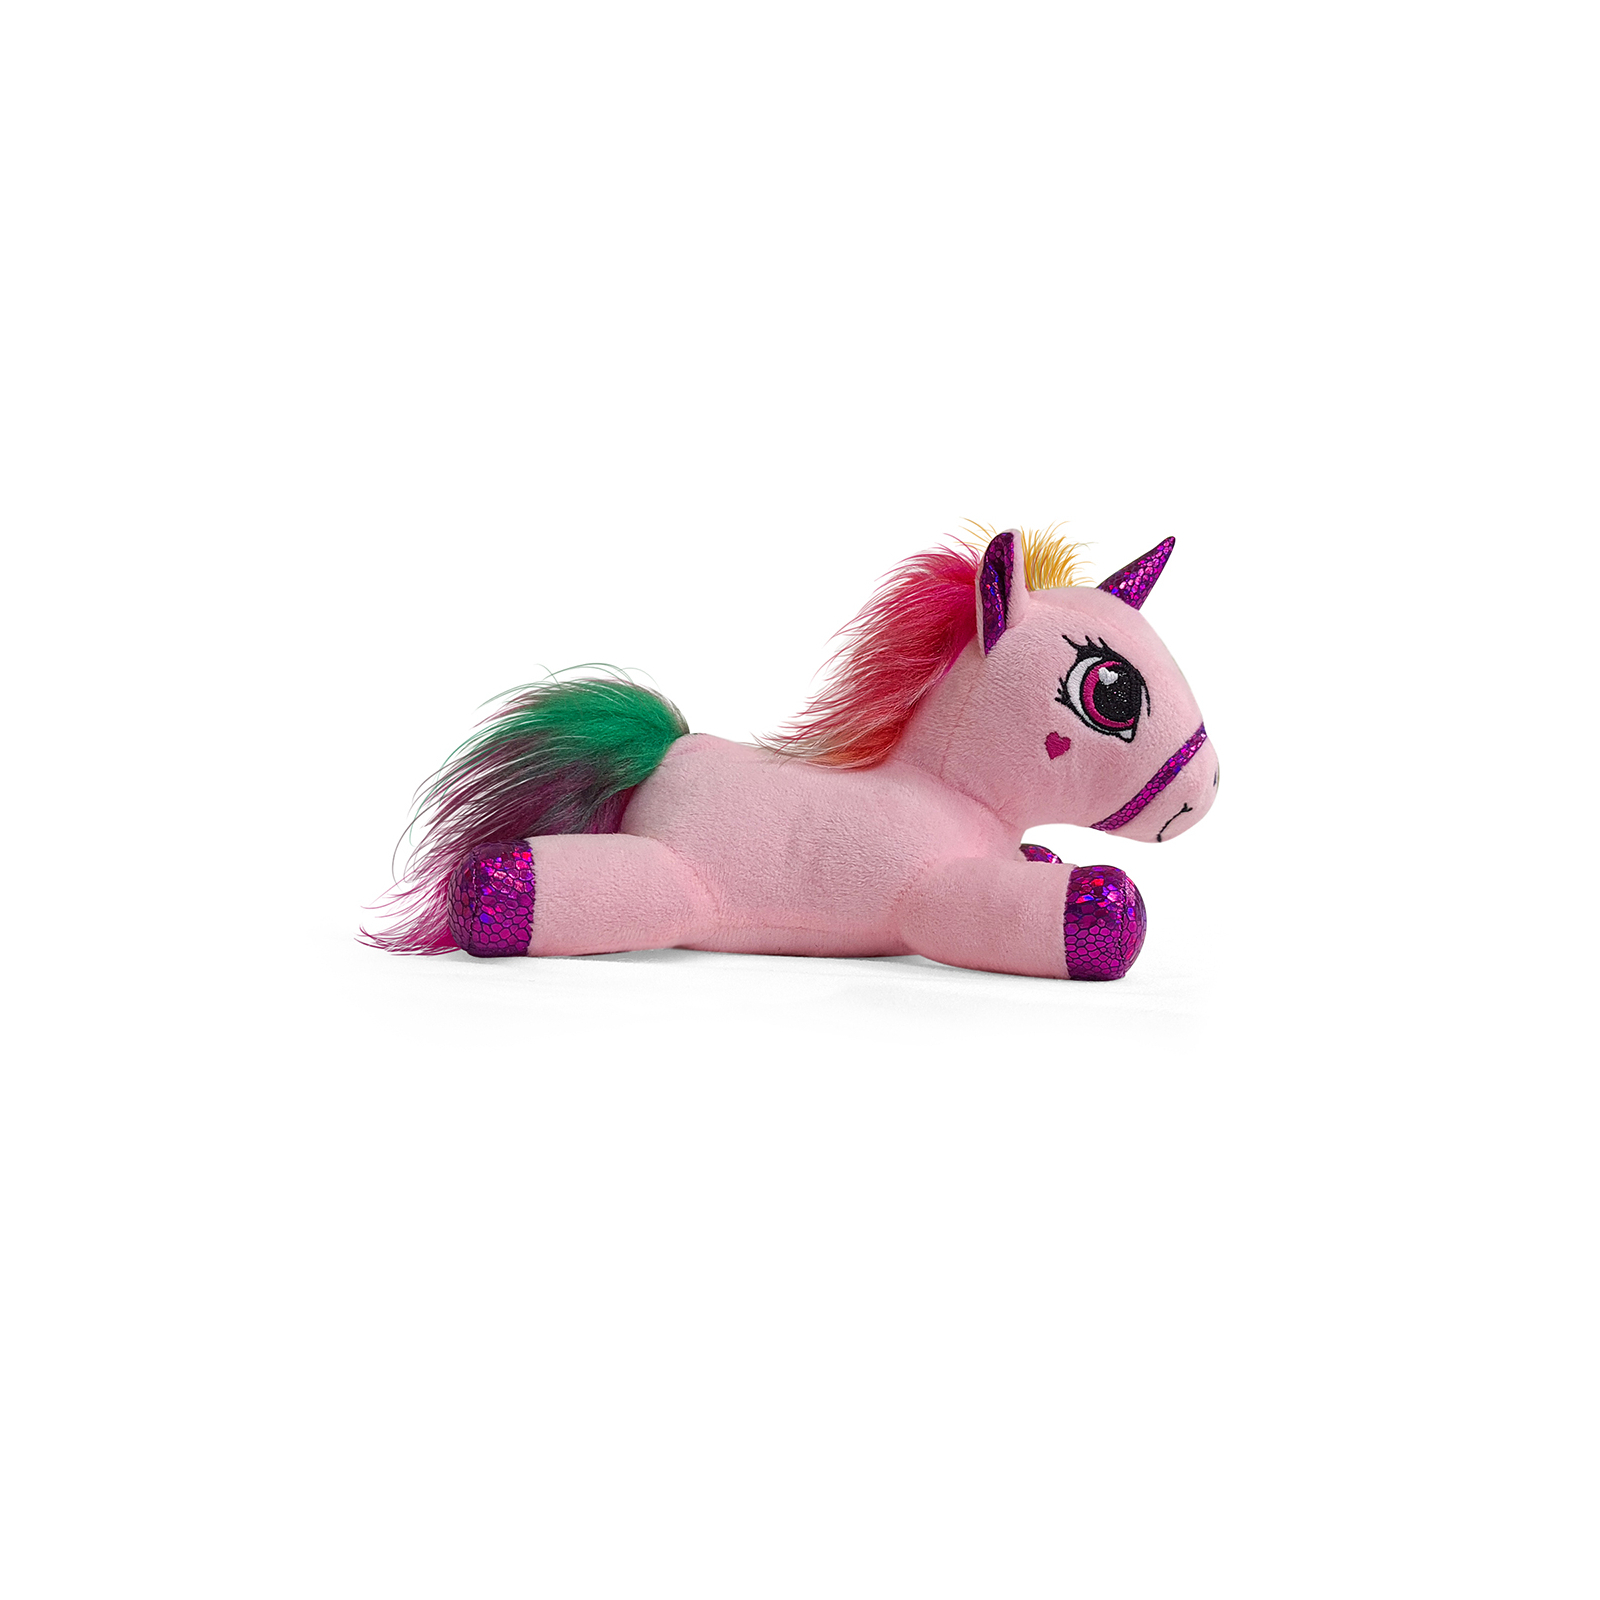 Мягкая игрушка WP Merchandise Unicorn Star (Единорог Star) 20 см (FWPUNISTAR22PK020)